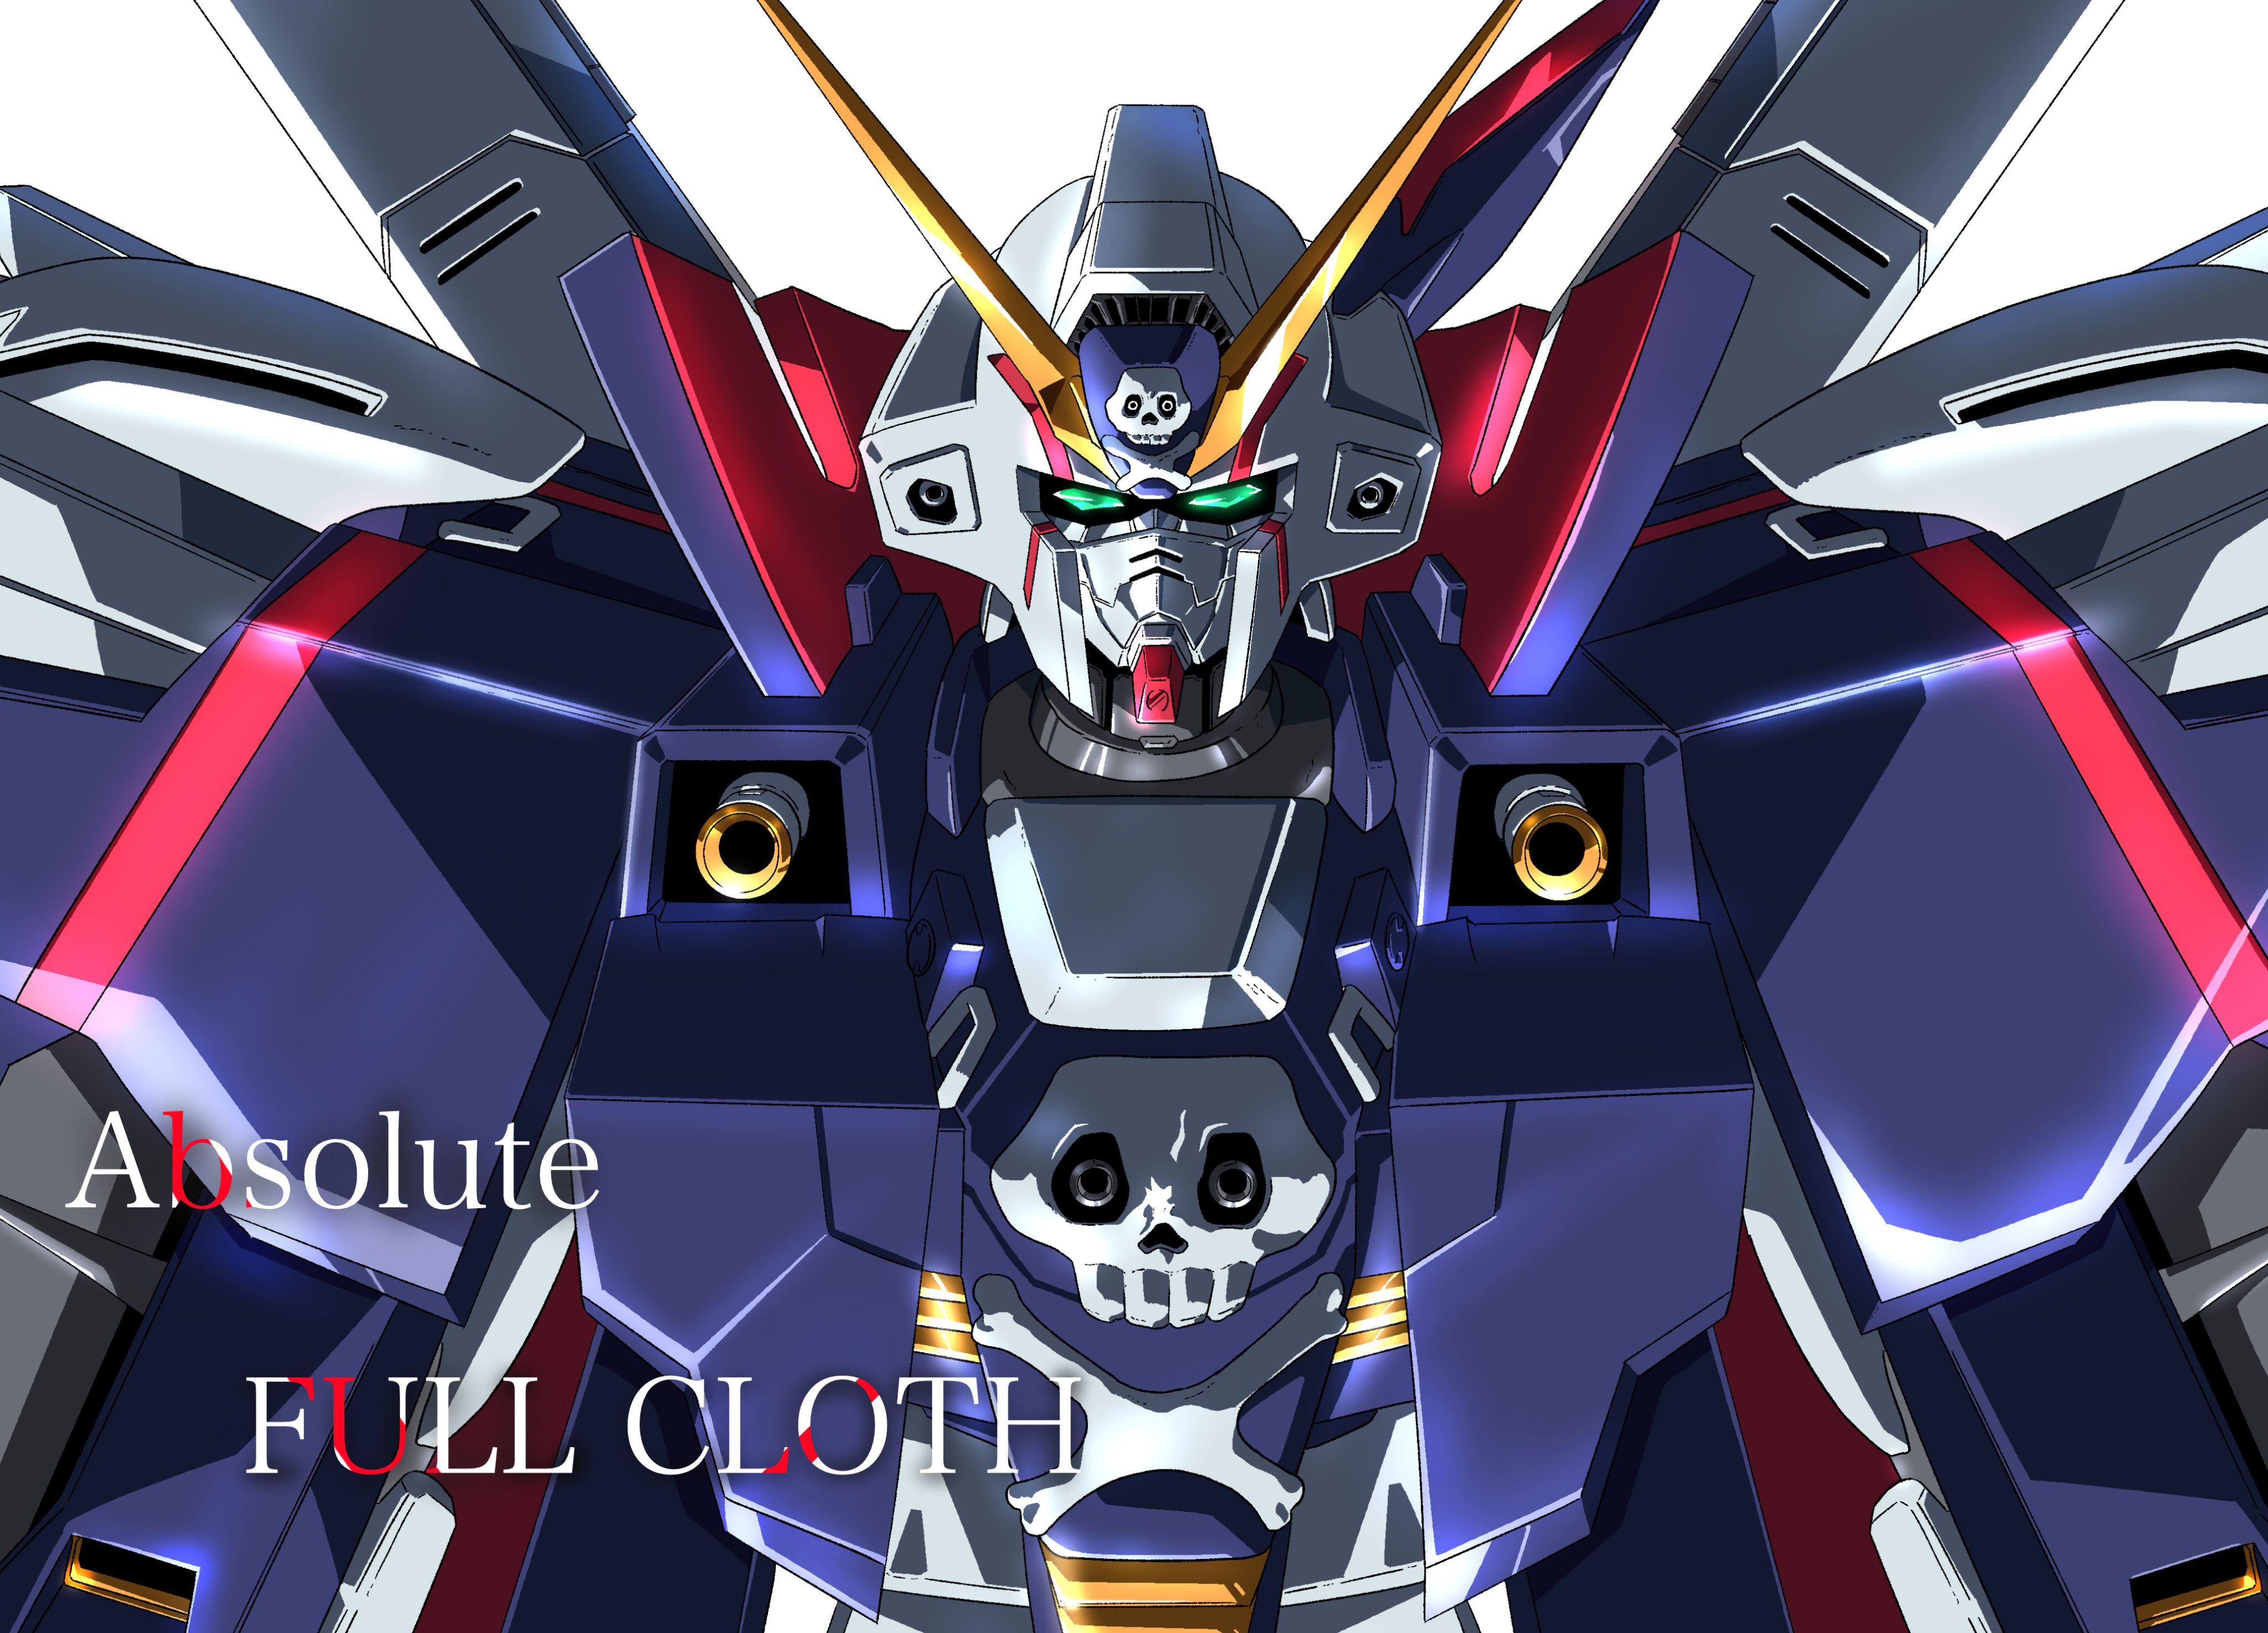 Anime Mechs Gundam Mobile Suit Crossbone Gundam Super Robot Wars Crossbone Gundam X 1 Full Cloth Art 4096x2949